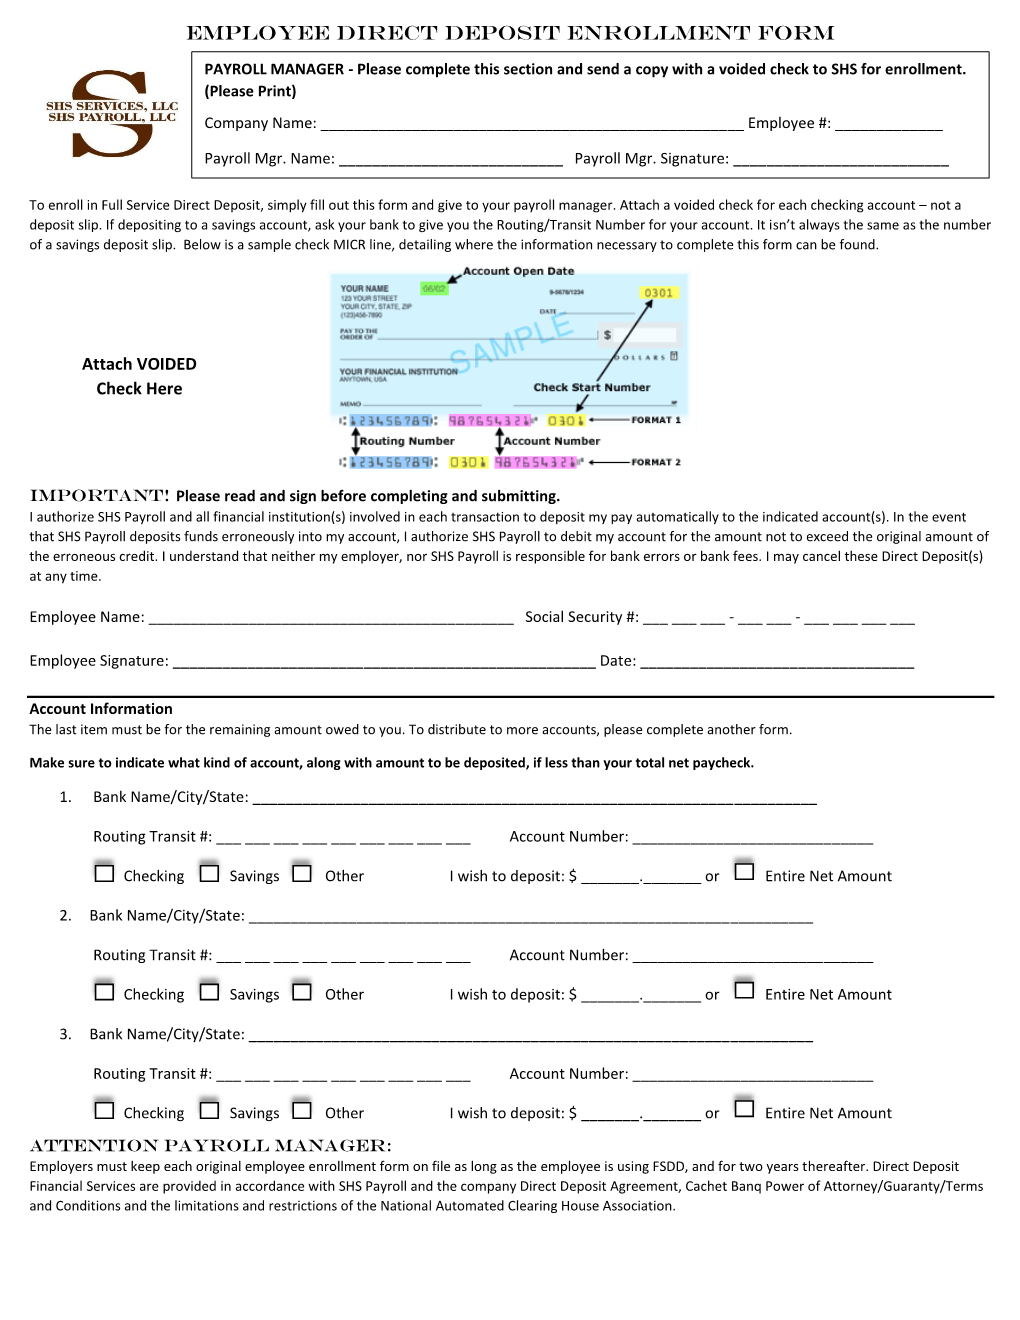 Direct Deposit Employee Enrollment Form